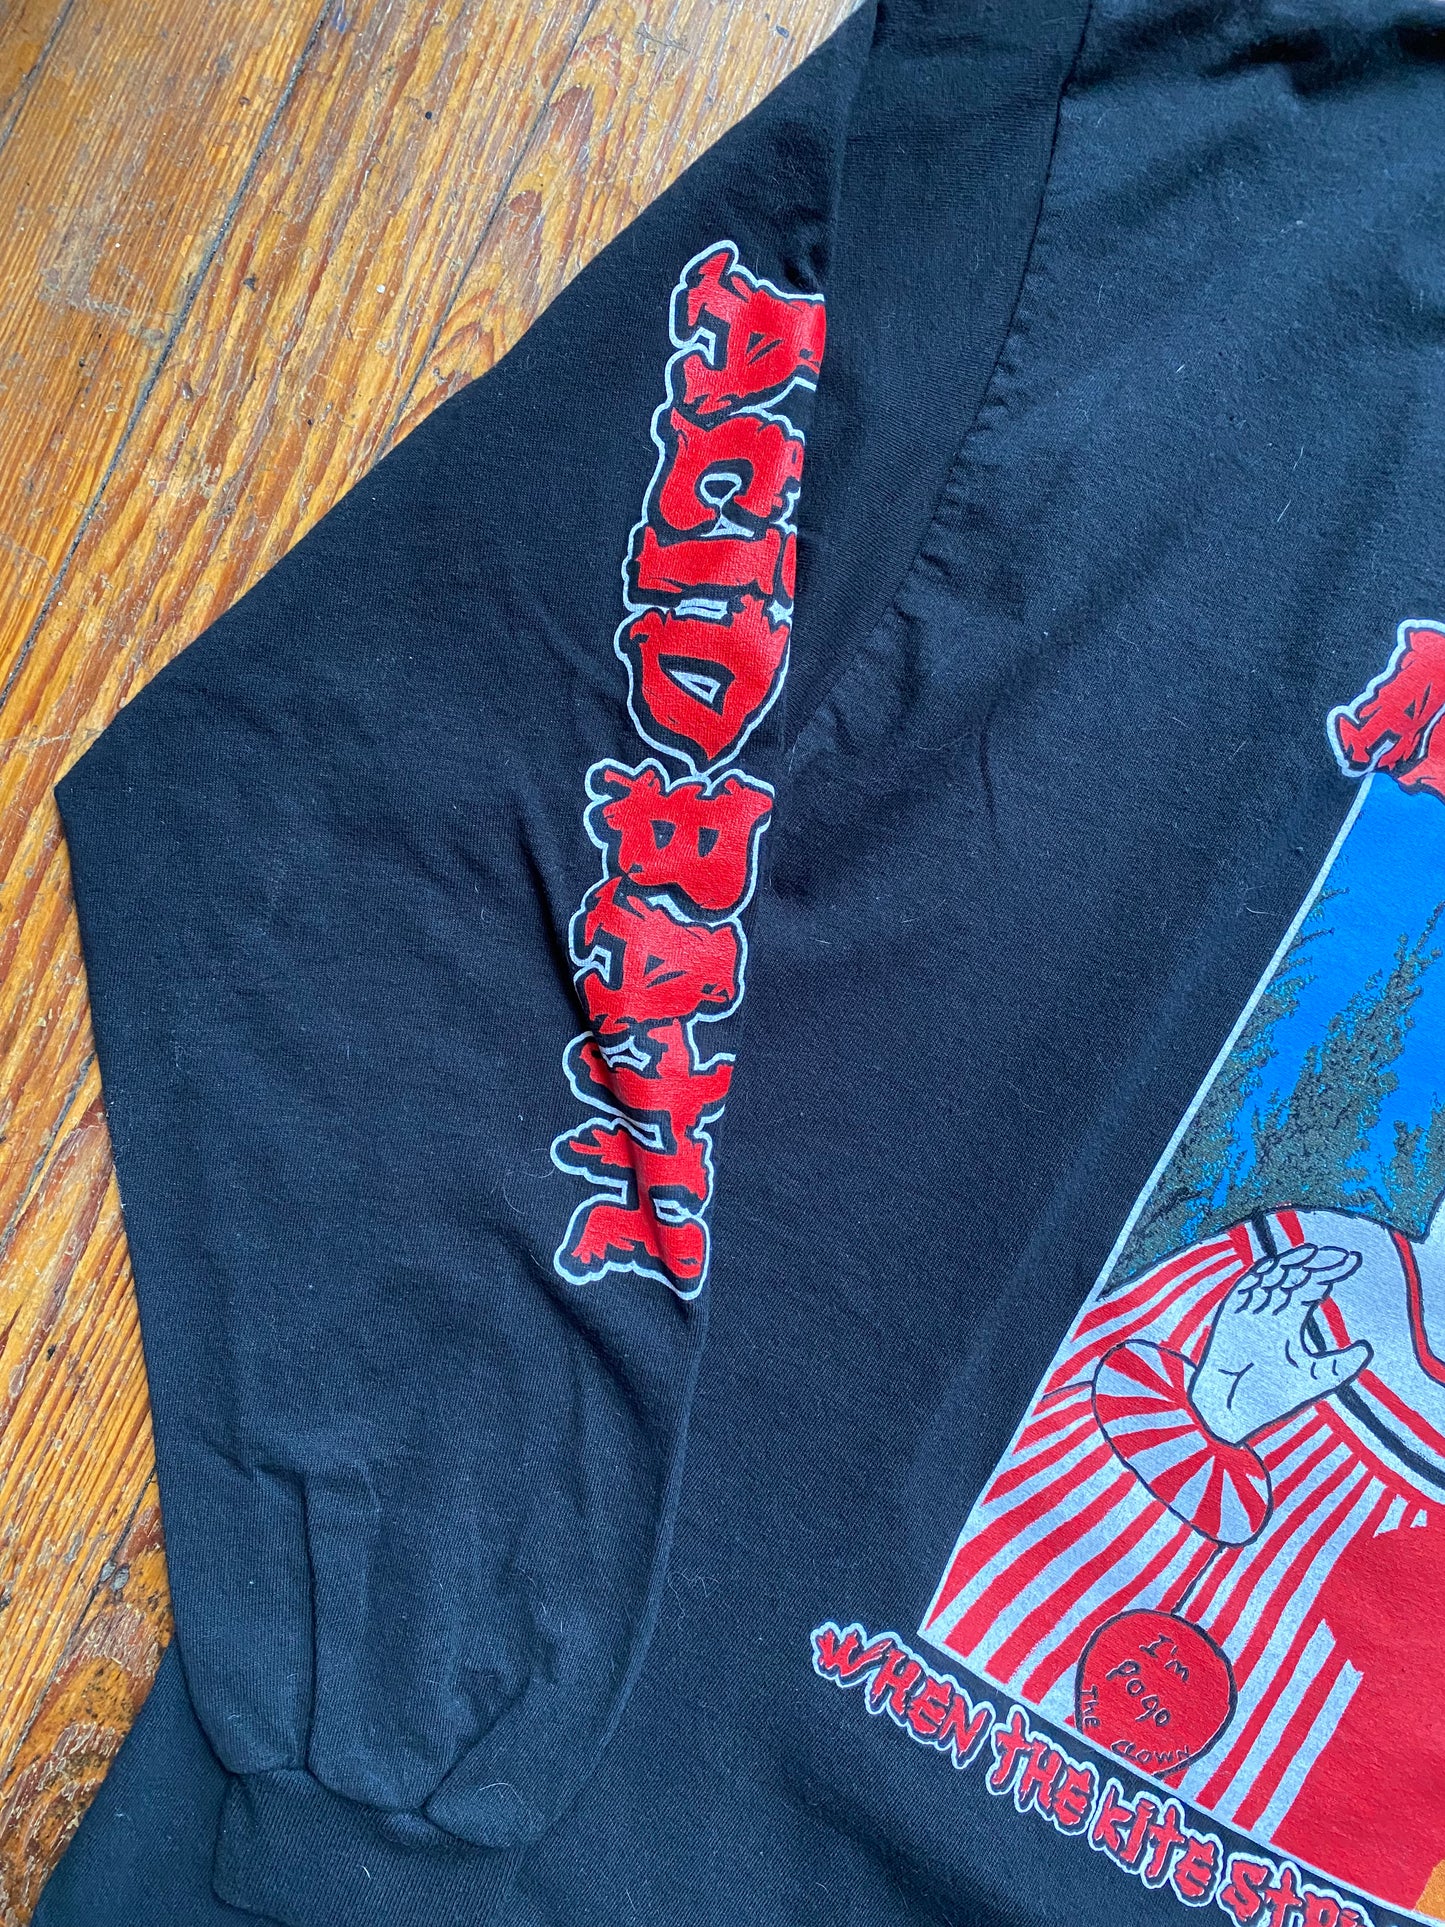 Vintage Acid Bath “When the Kite String Pops” Long Sleeve Shirt